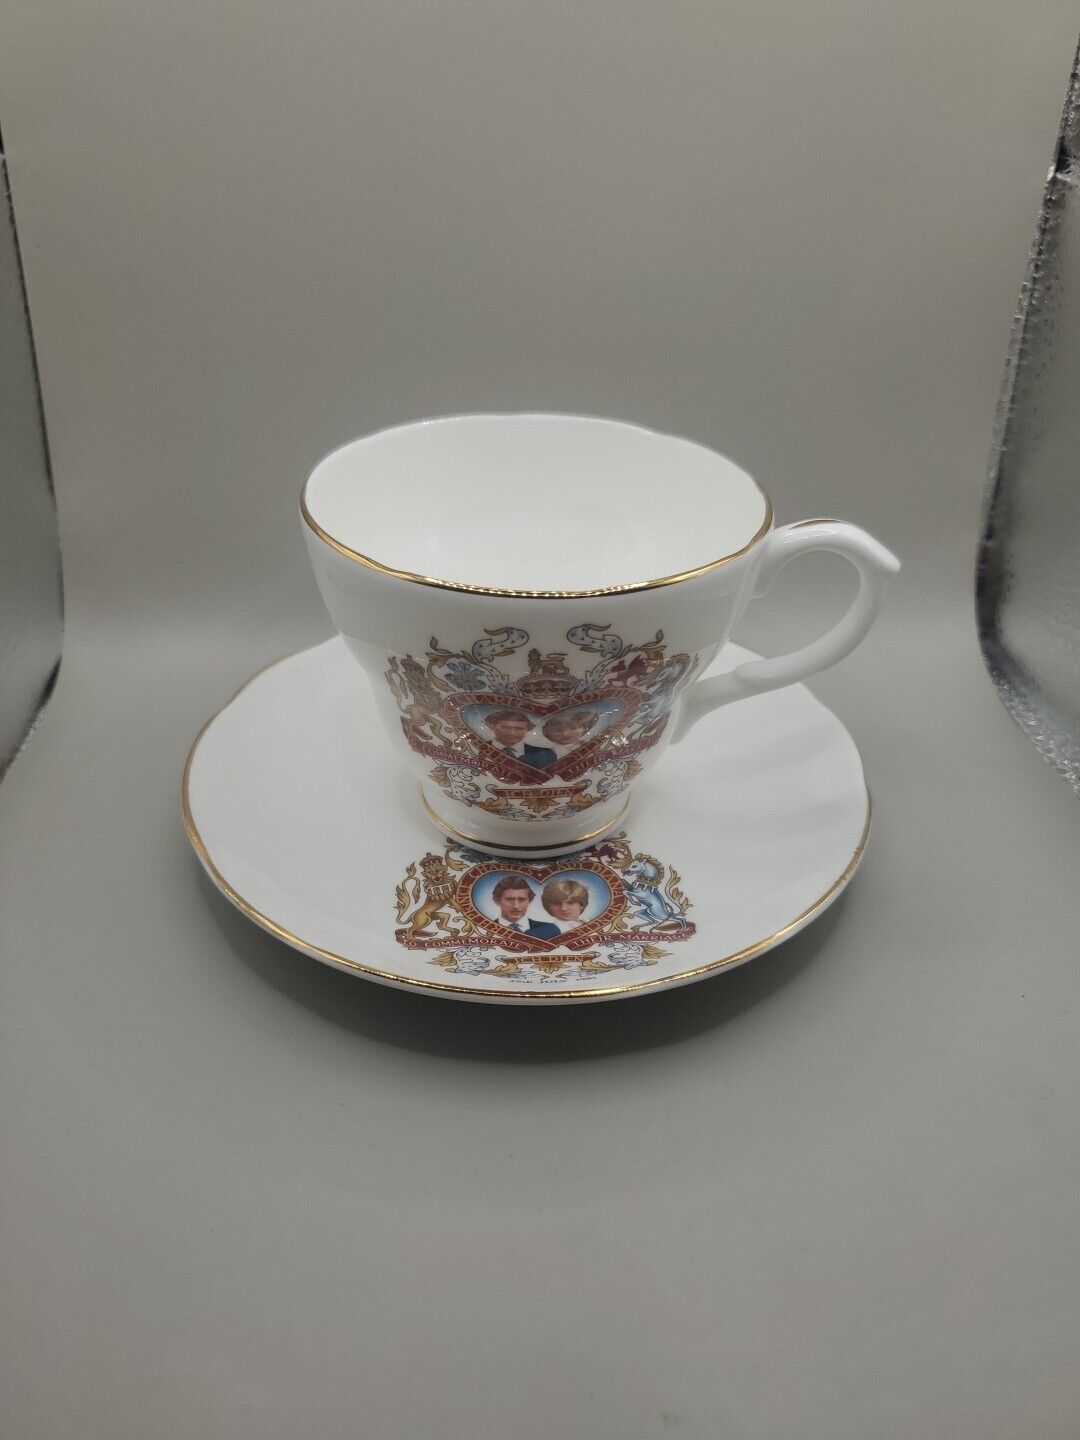 Prince Charles & Lady Diana Commemorative 1981 Royal Wedding Tea Cup & Saucer